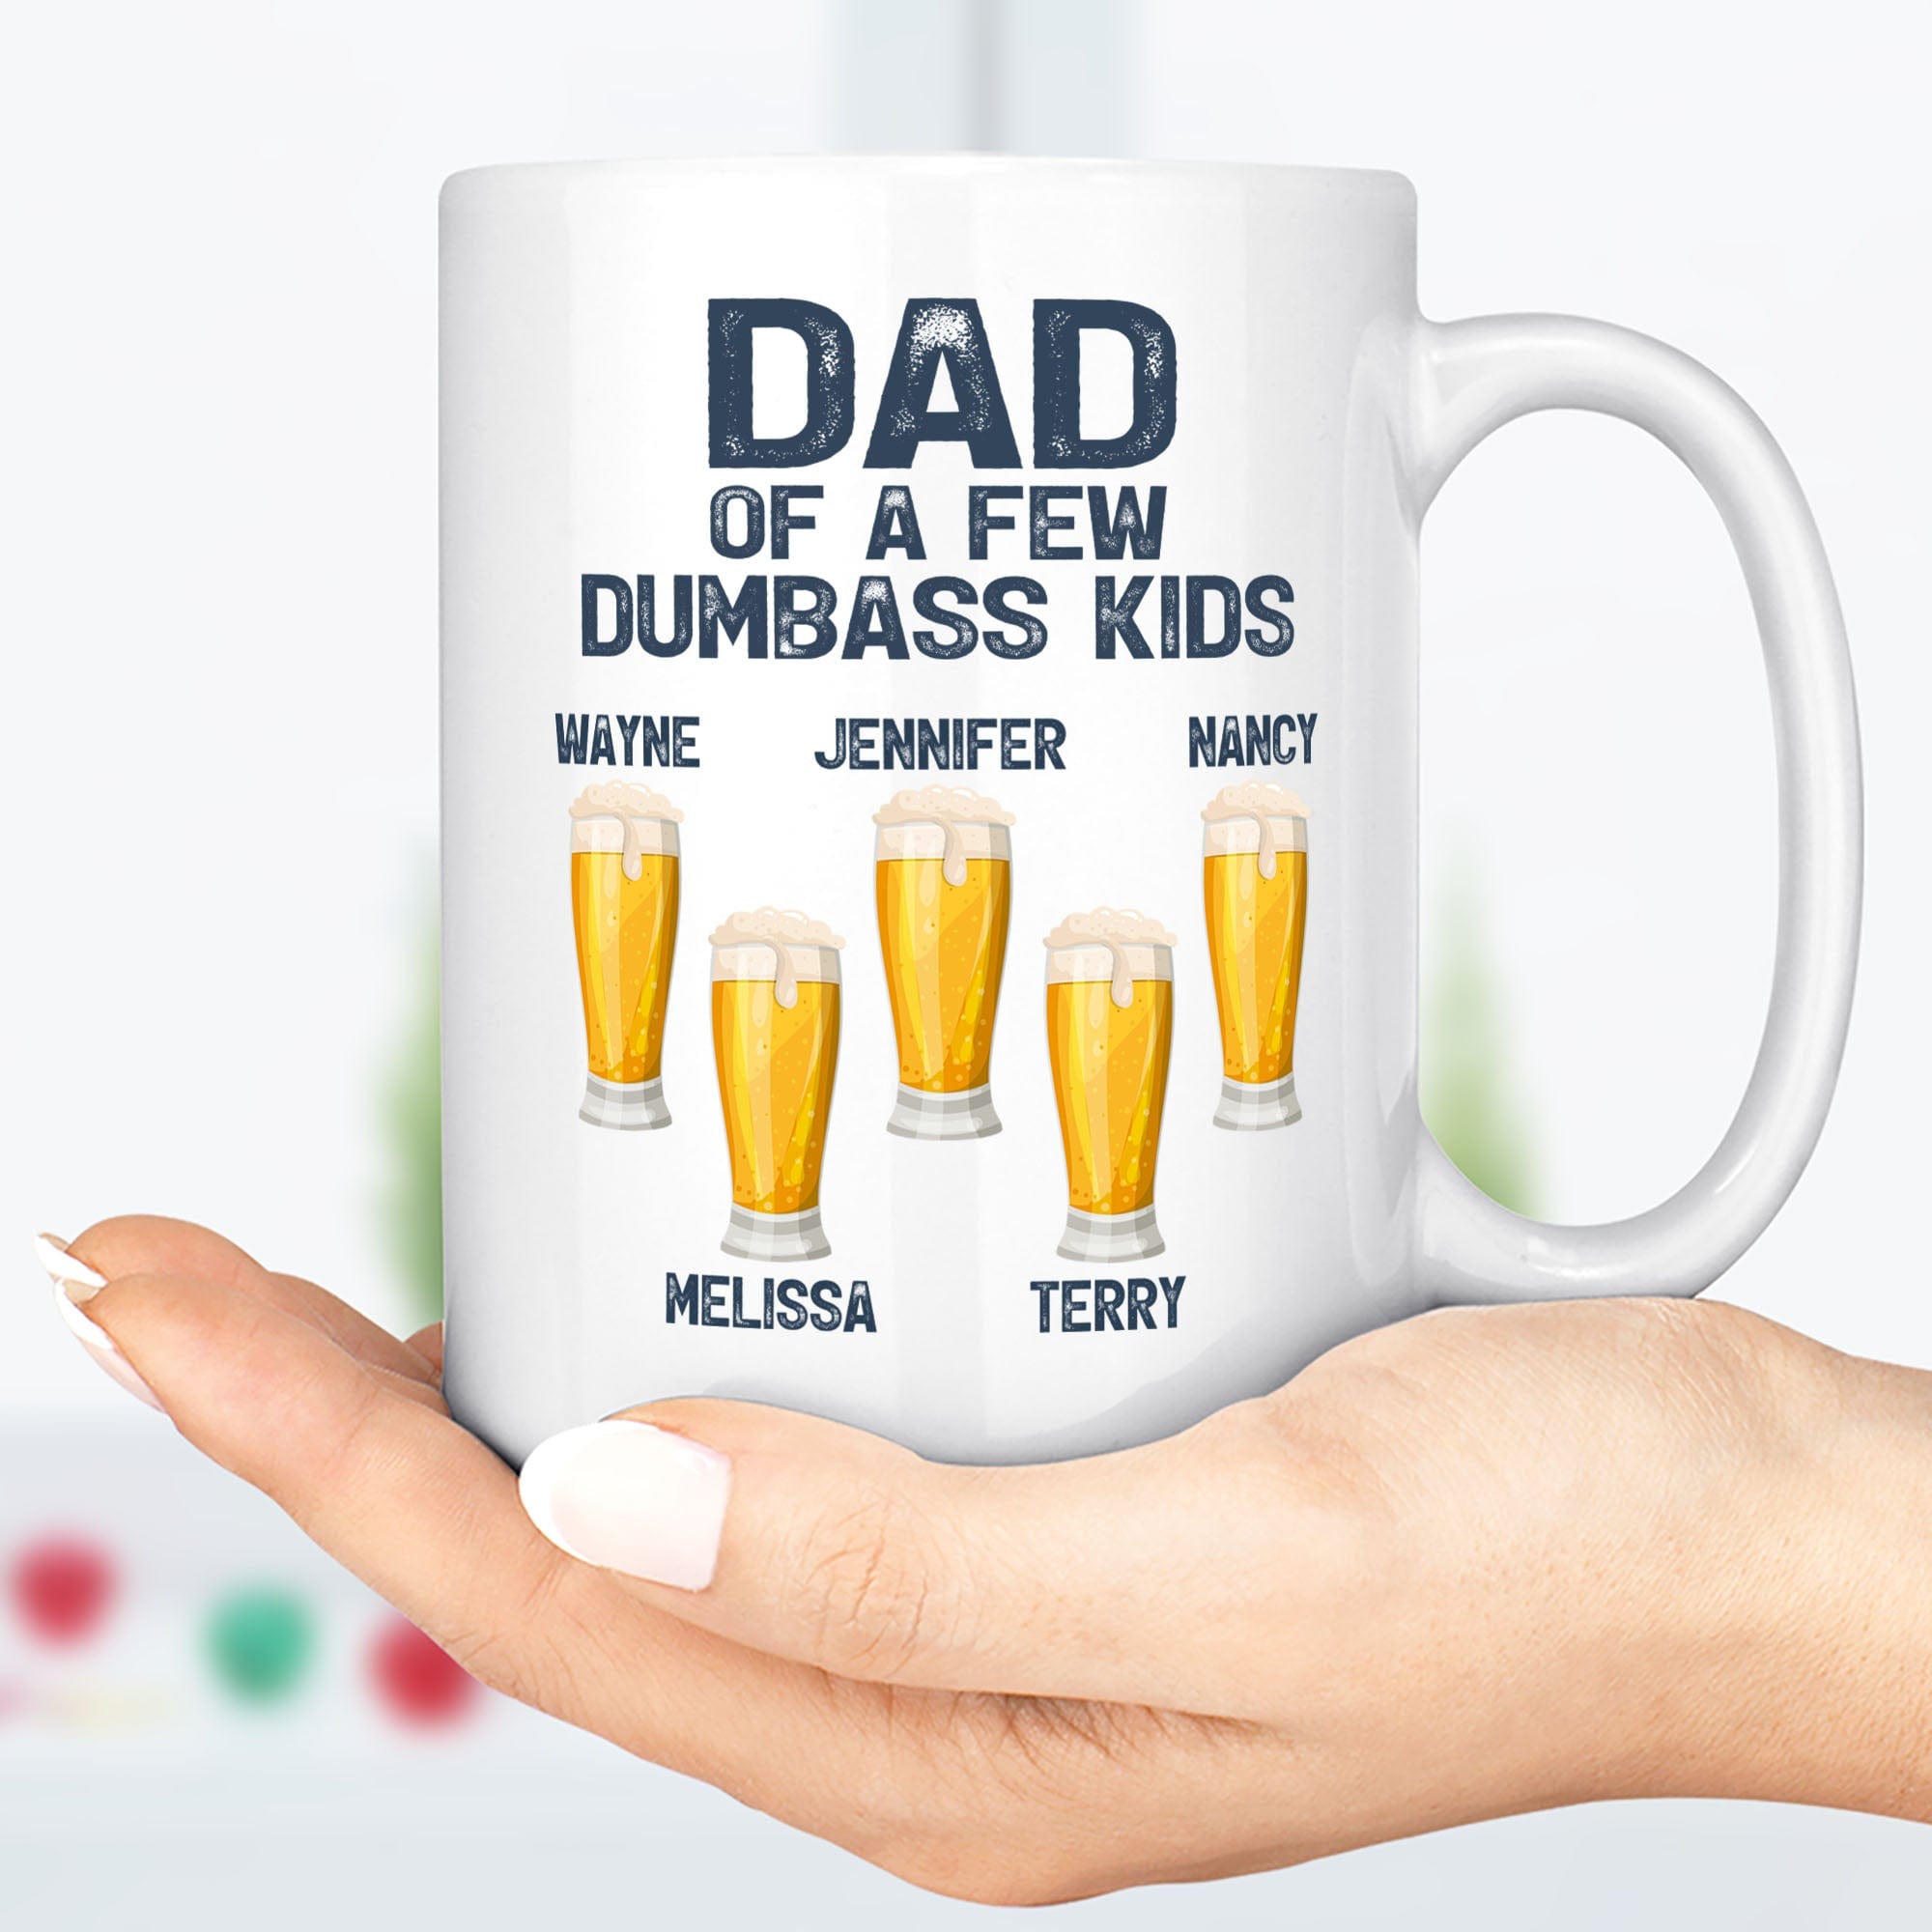 GeckoCustom The Drinking Legend Dad Of Dumbass Kids Personalized Custom Family Mug C323 11oz